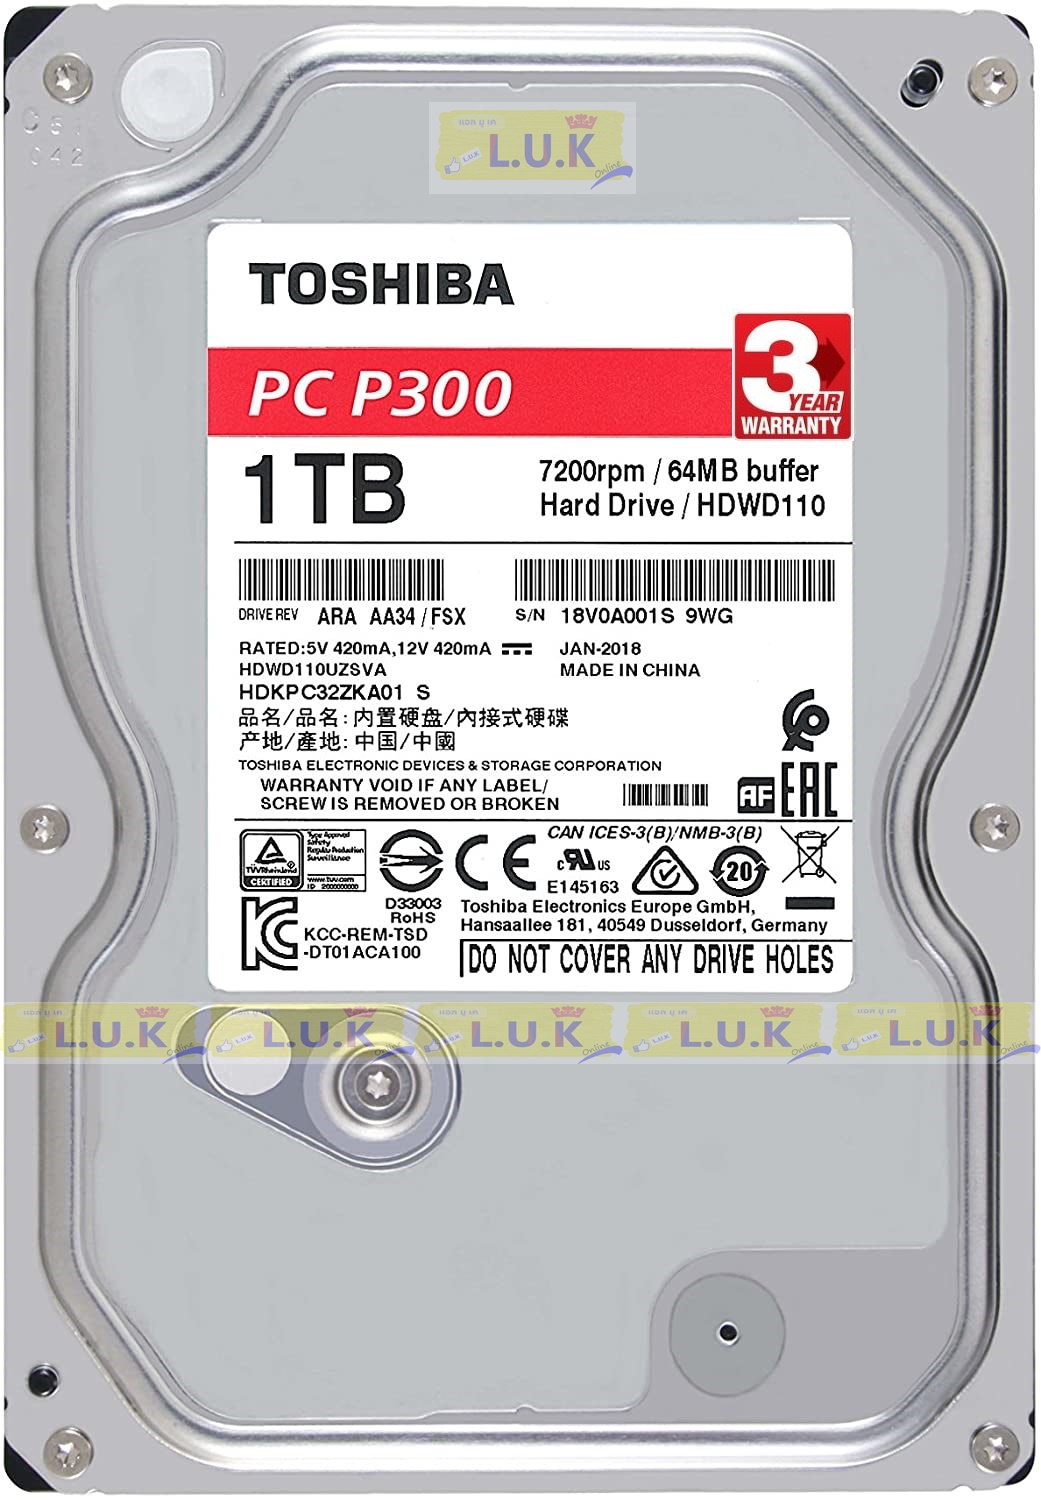 1 TB (ฮาร์ดดิสก์) Toshiba P300 SATA-III 64MB 7200RPM (HDWD110) - สินค้ารับประกัน 3 ปี